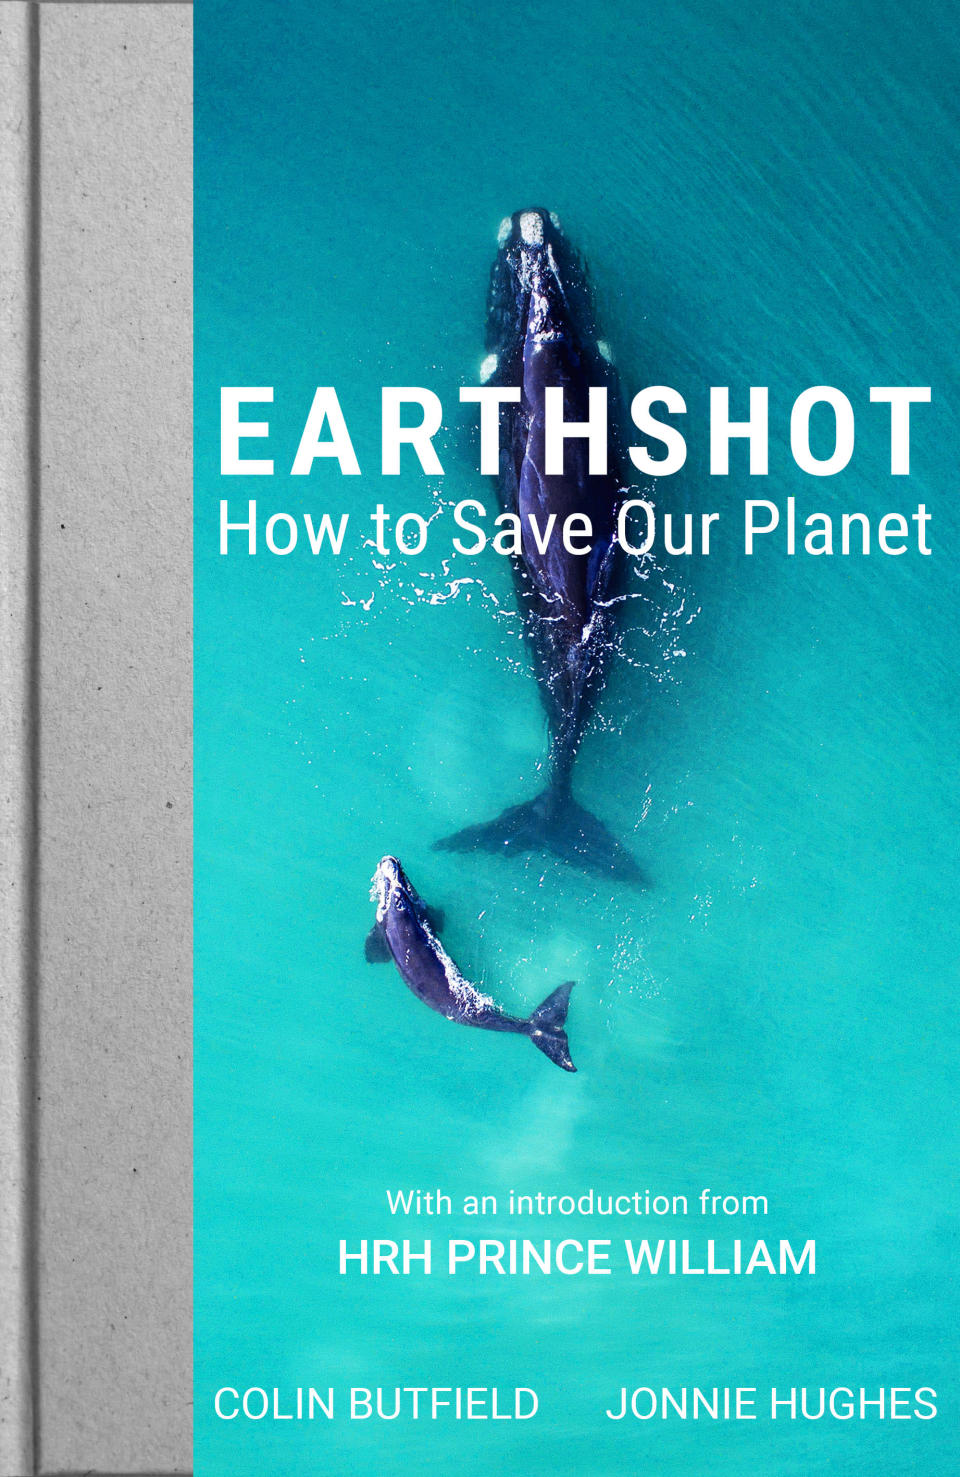 The Earthshot book